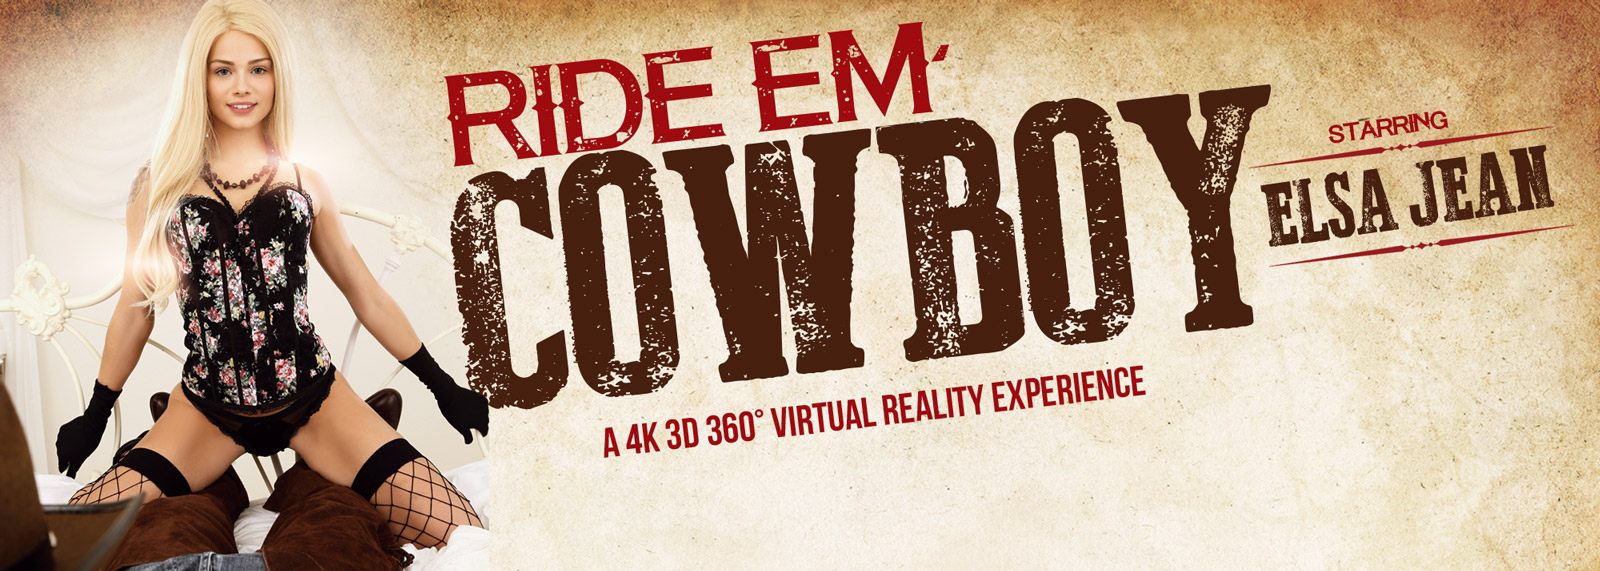 Ride 'Em Cowboy with Elsa Jean  Slideshow